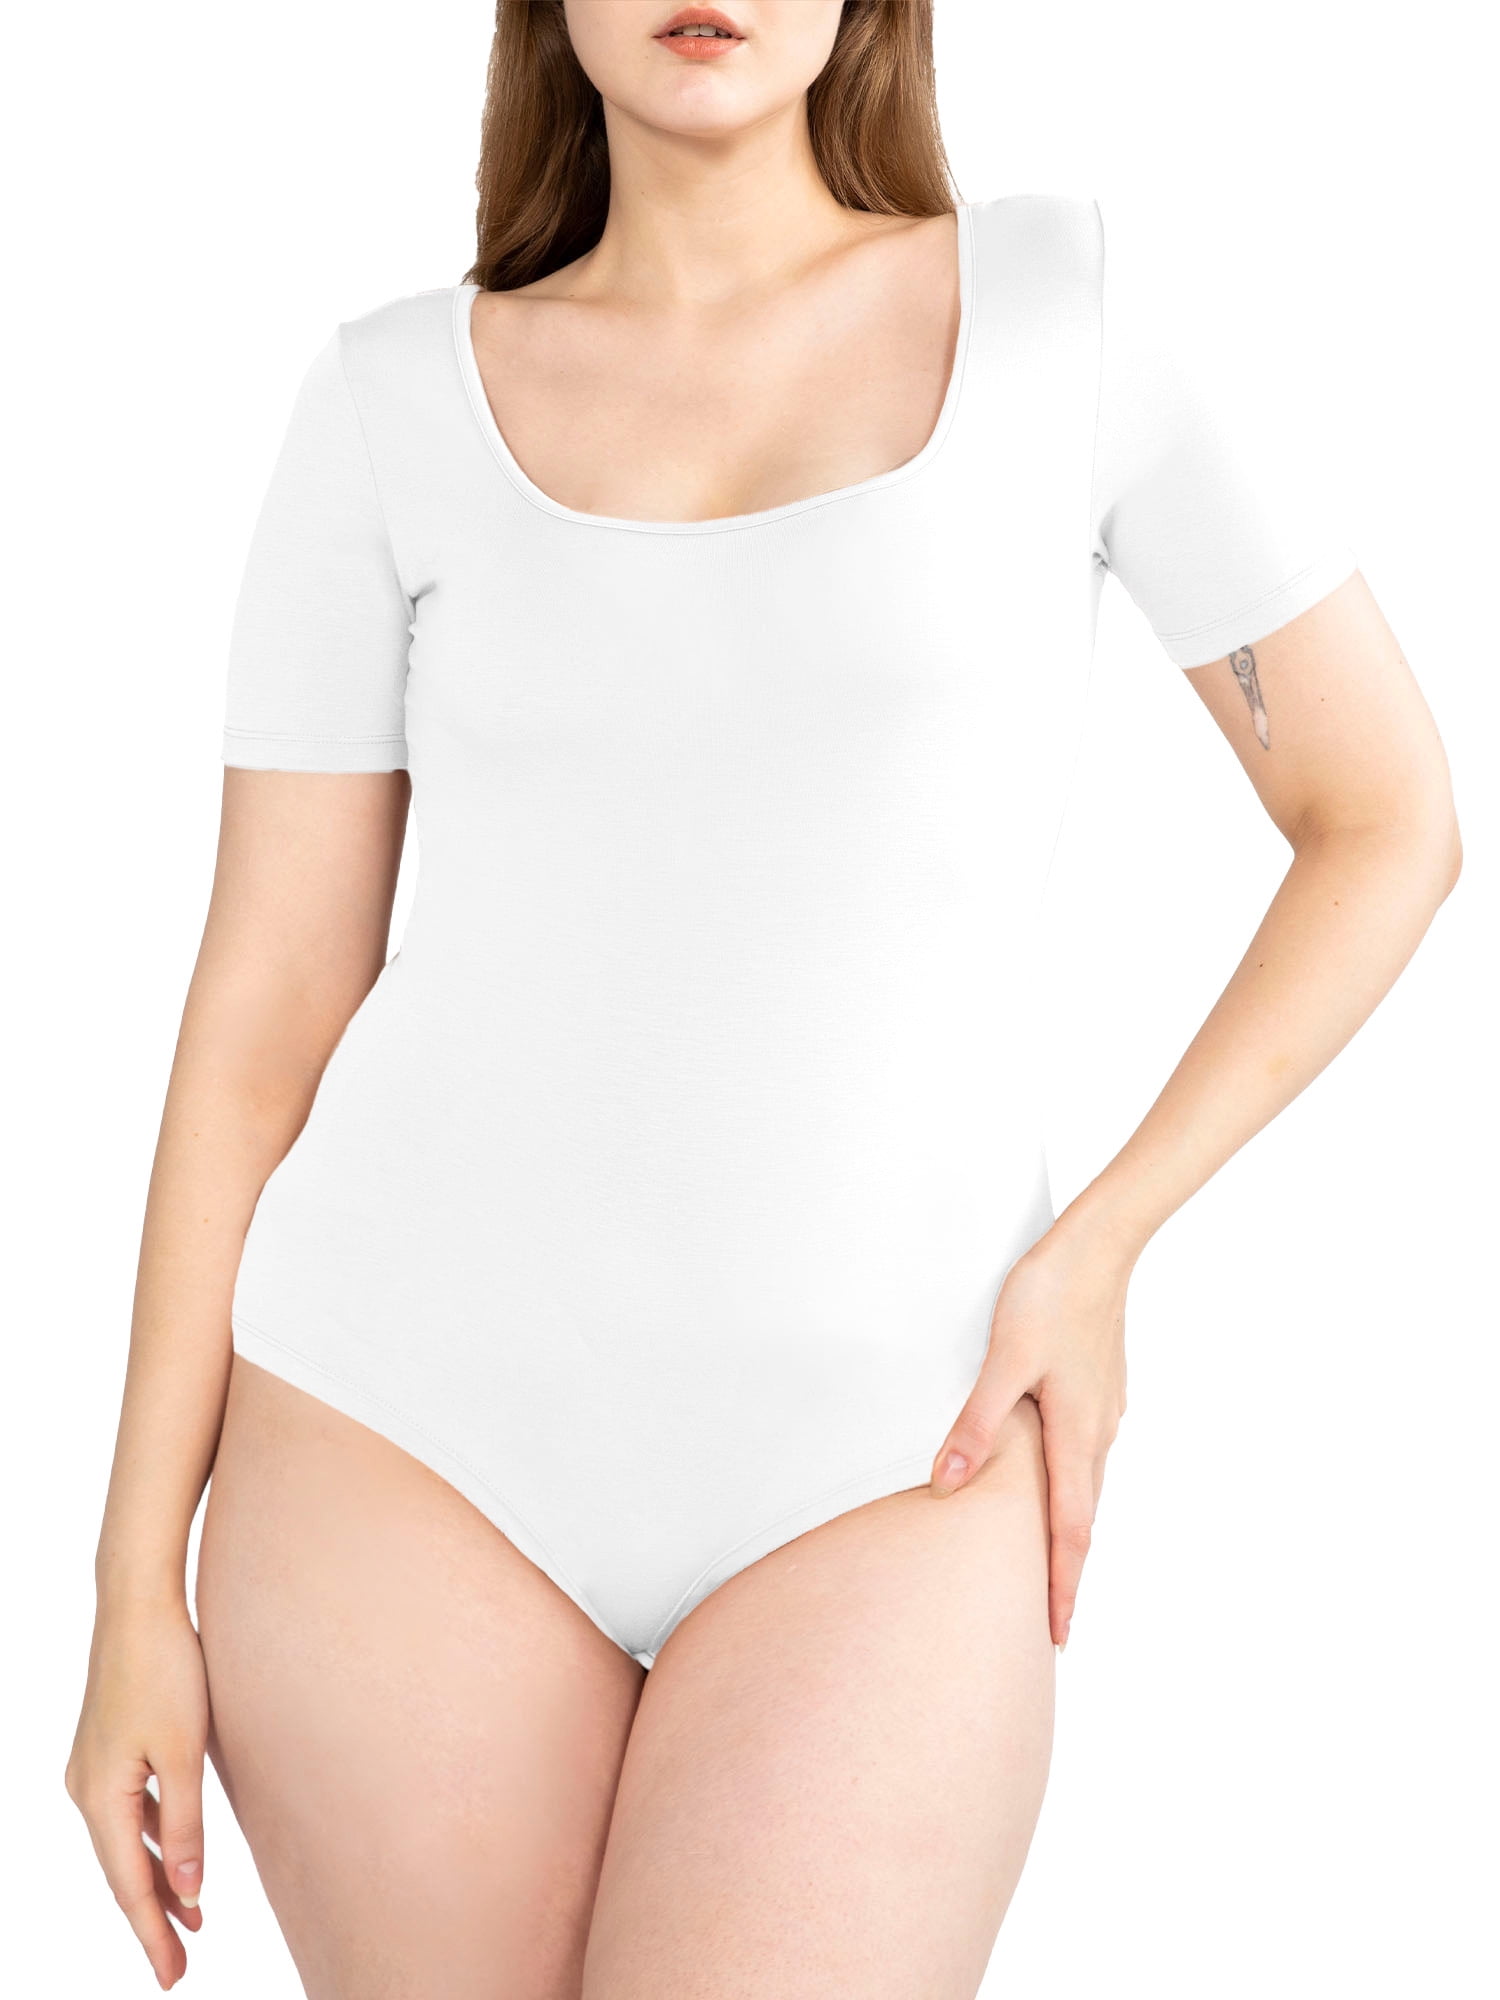 POSESHE Women's Plus Size Square Neck Short Sleeve Bodysuit, S, White 